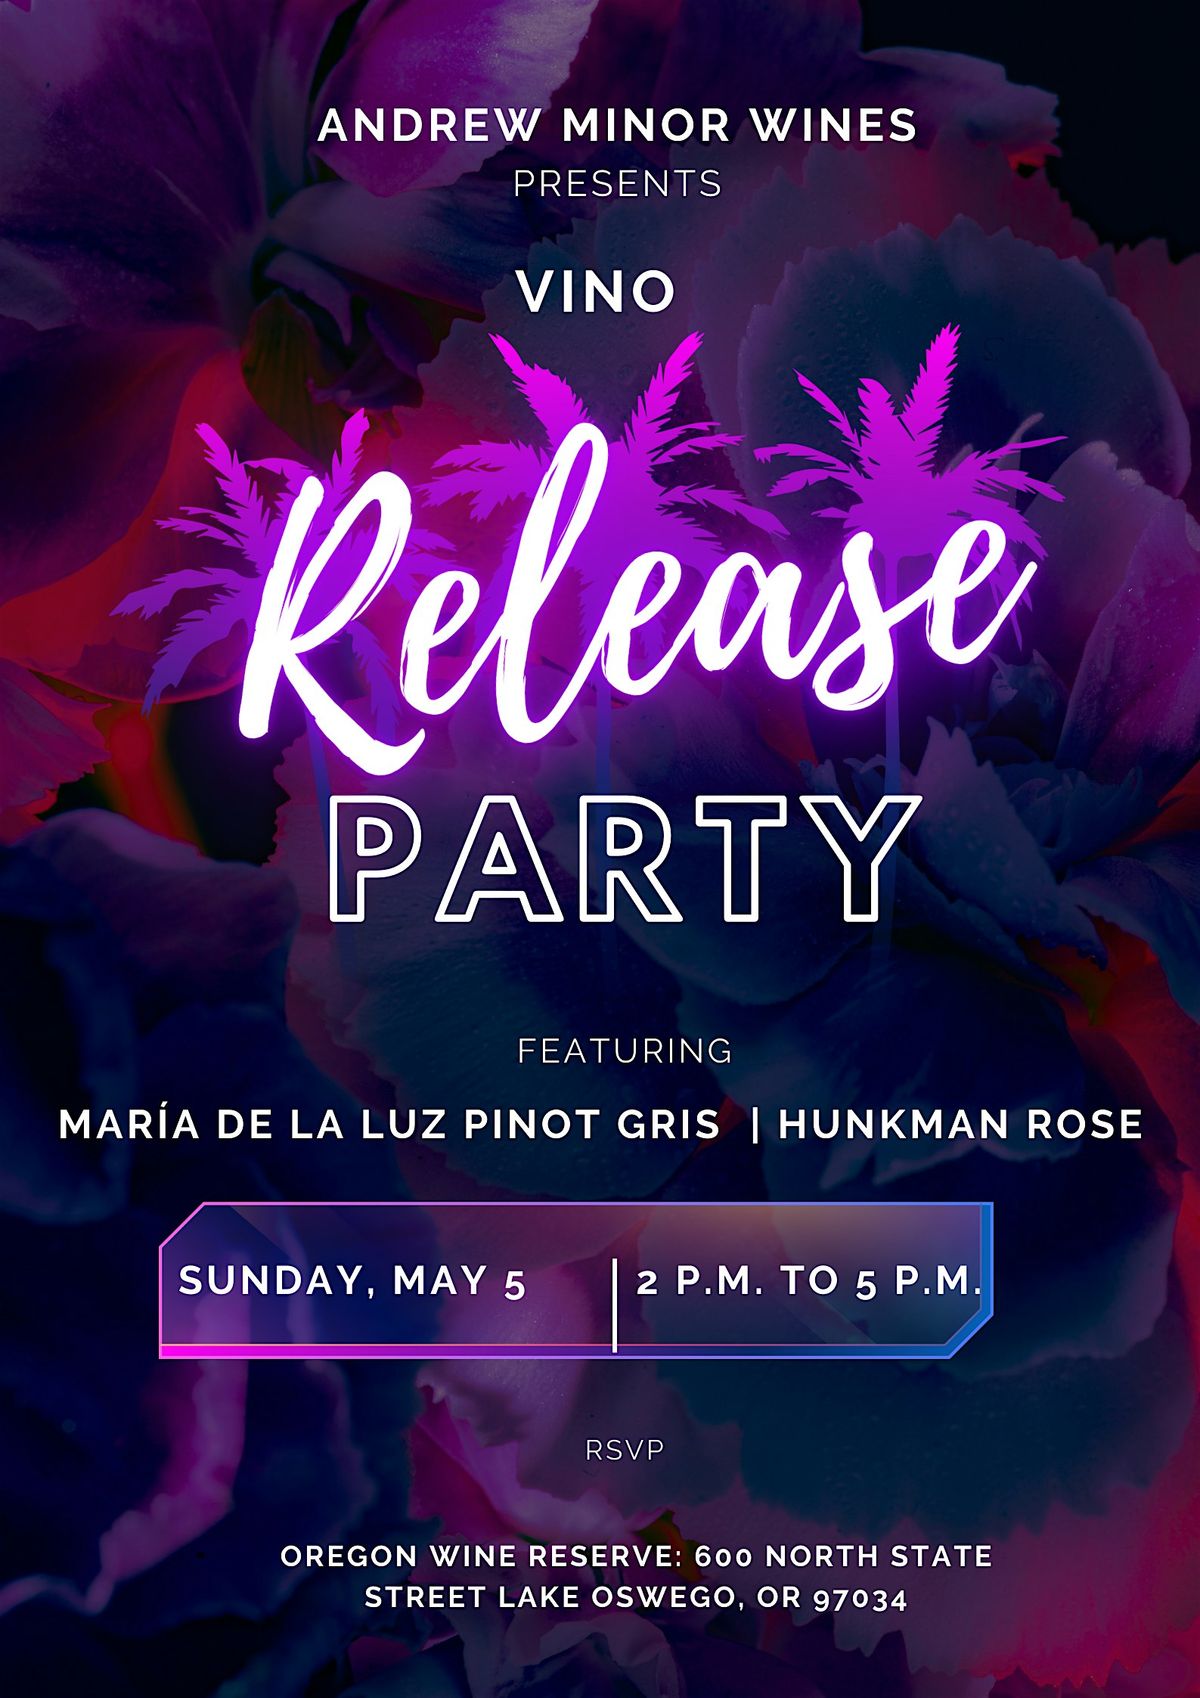 Vino release party